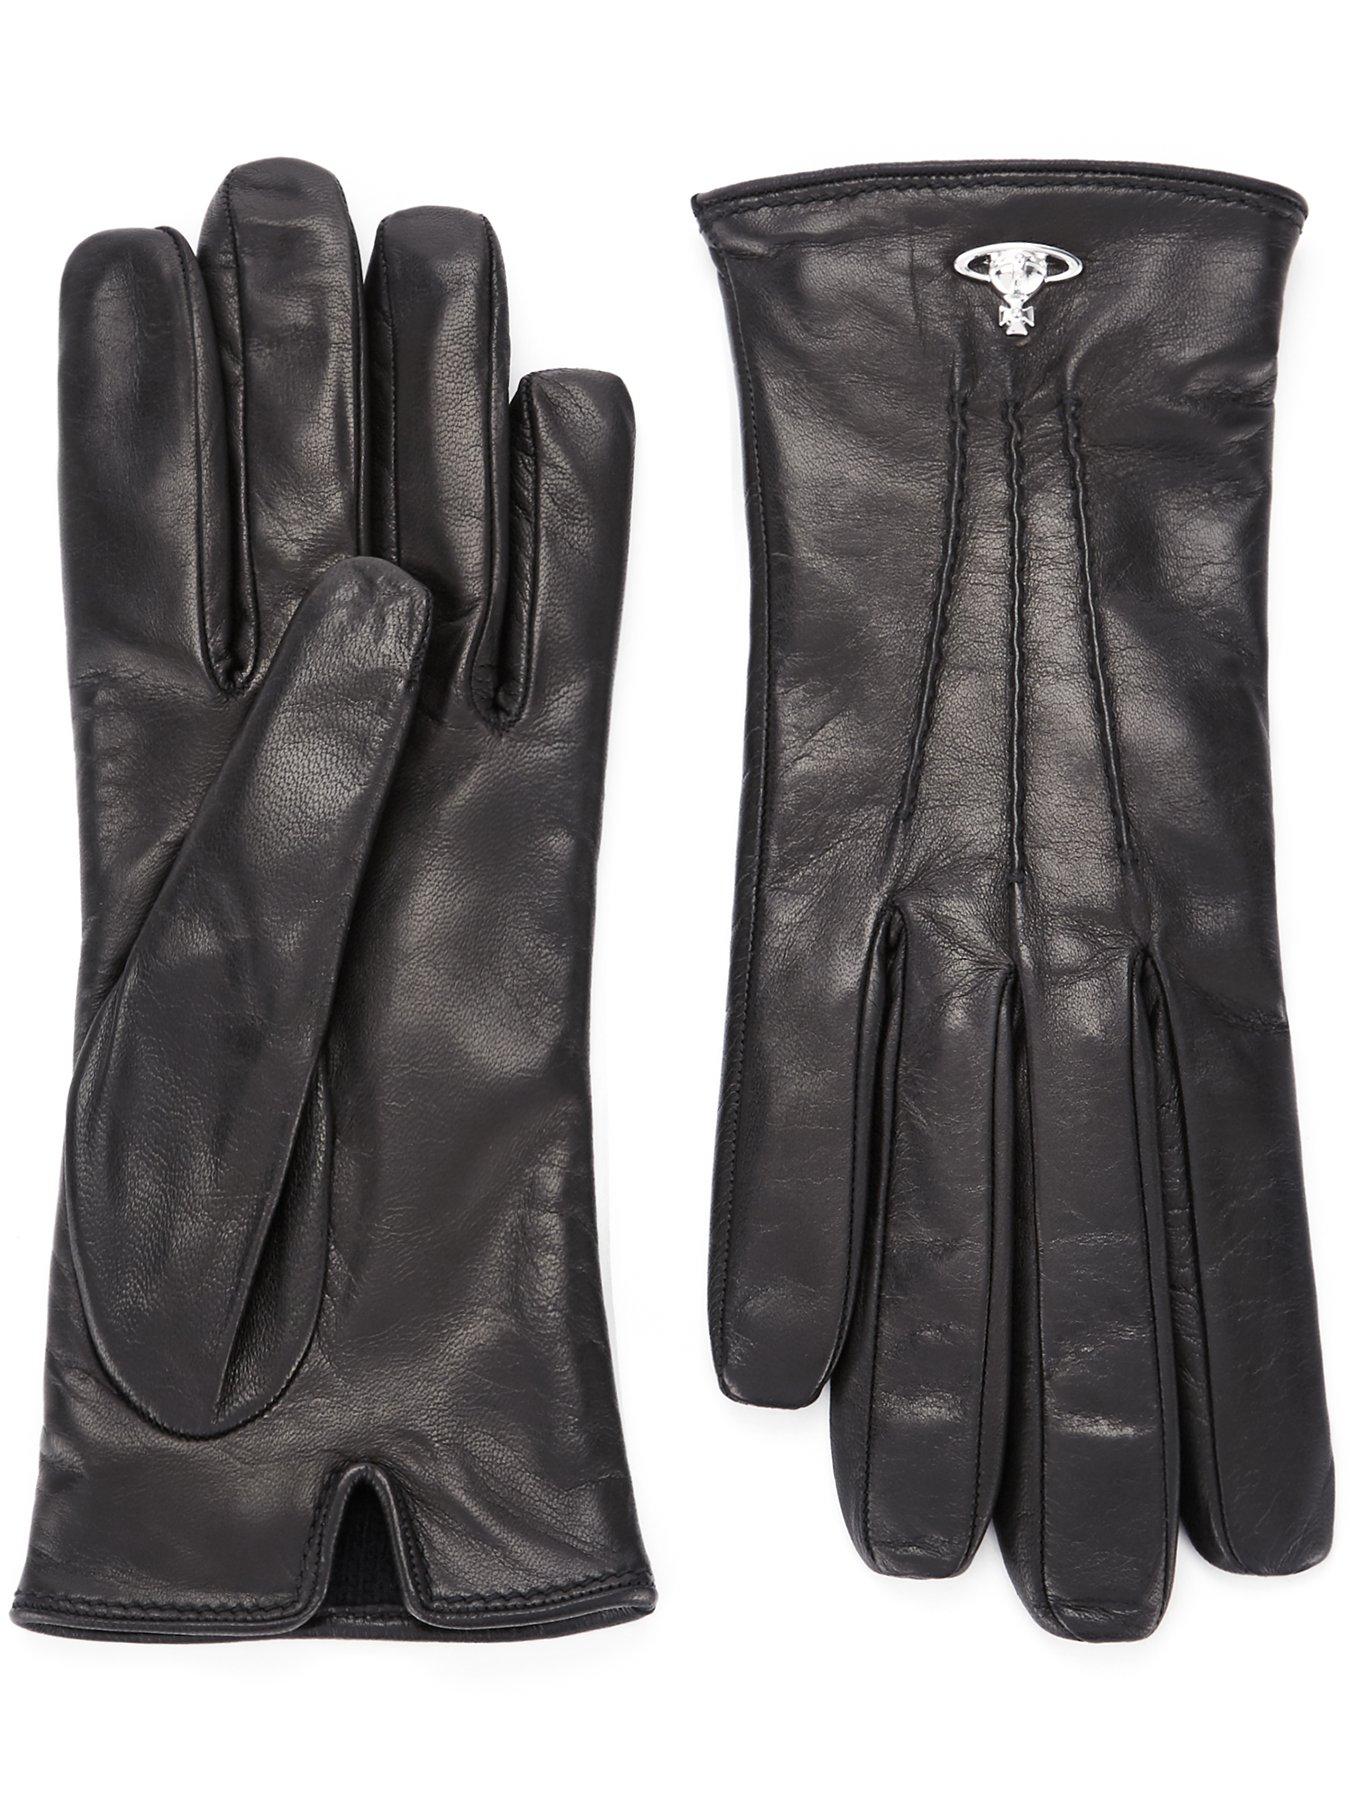 Vivienne Westwood Orb Leather Gloves - Black | very.co.uk